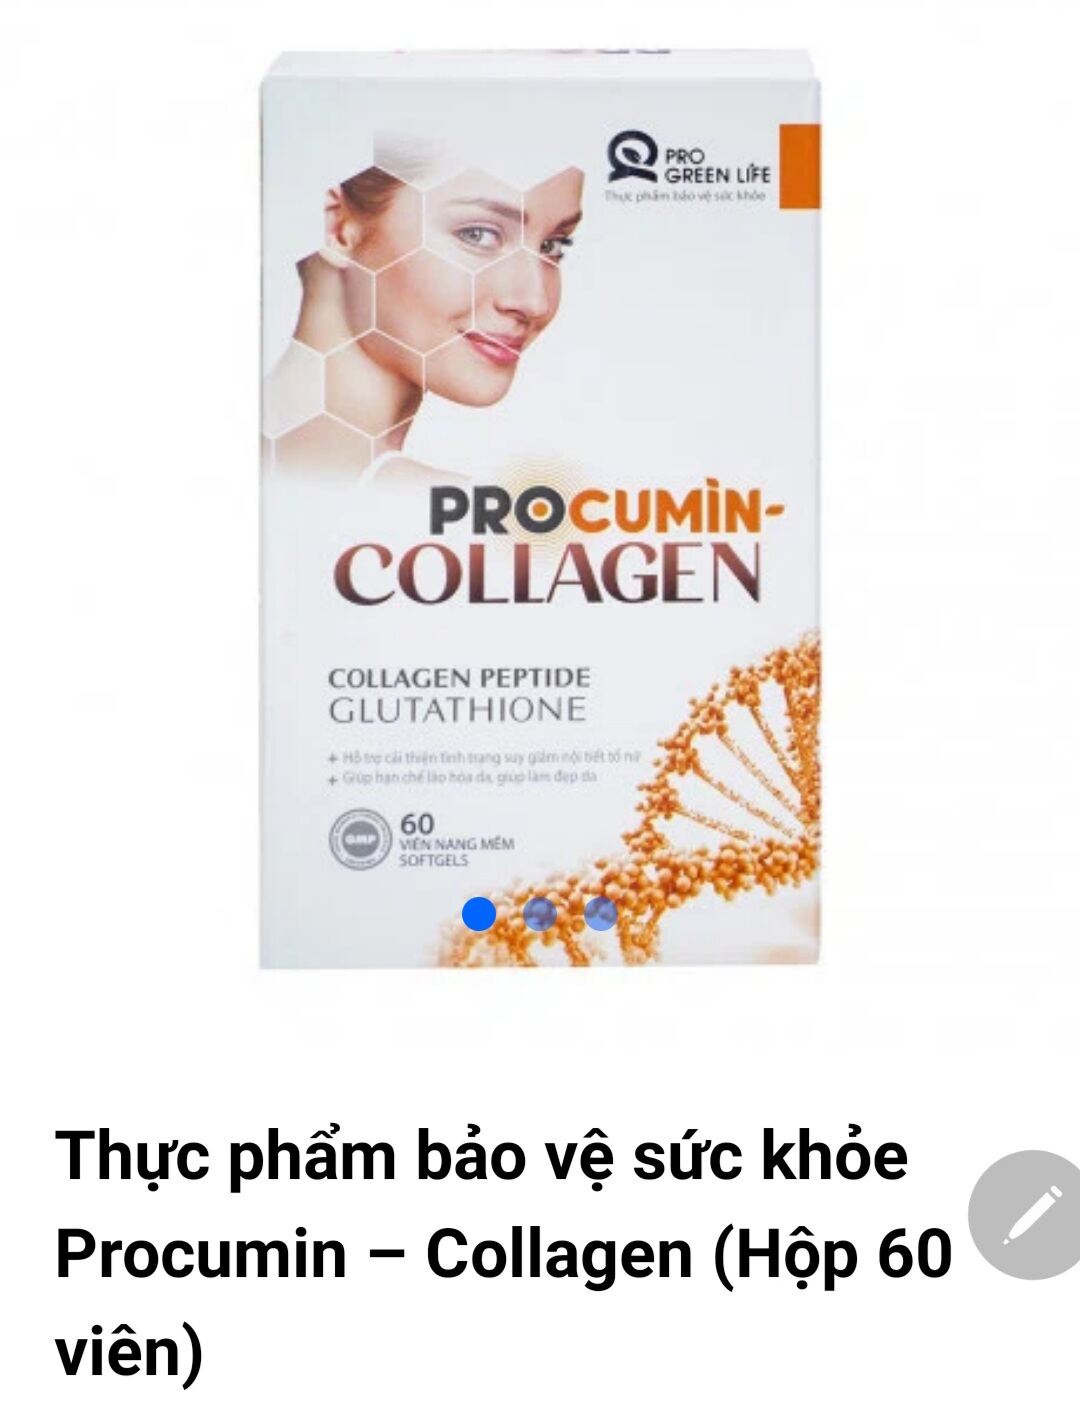 Procumin collagen